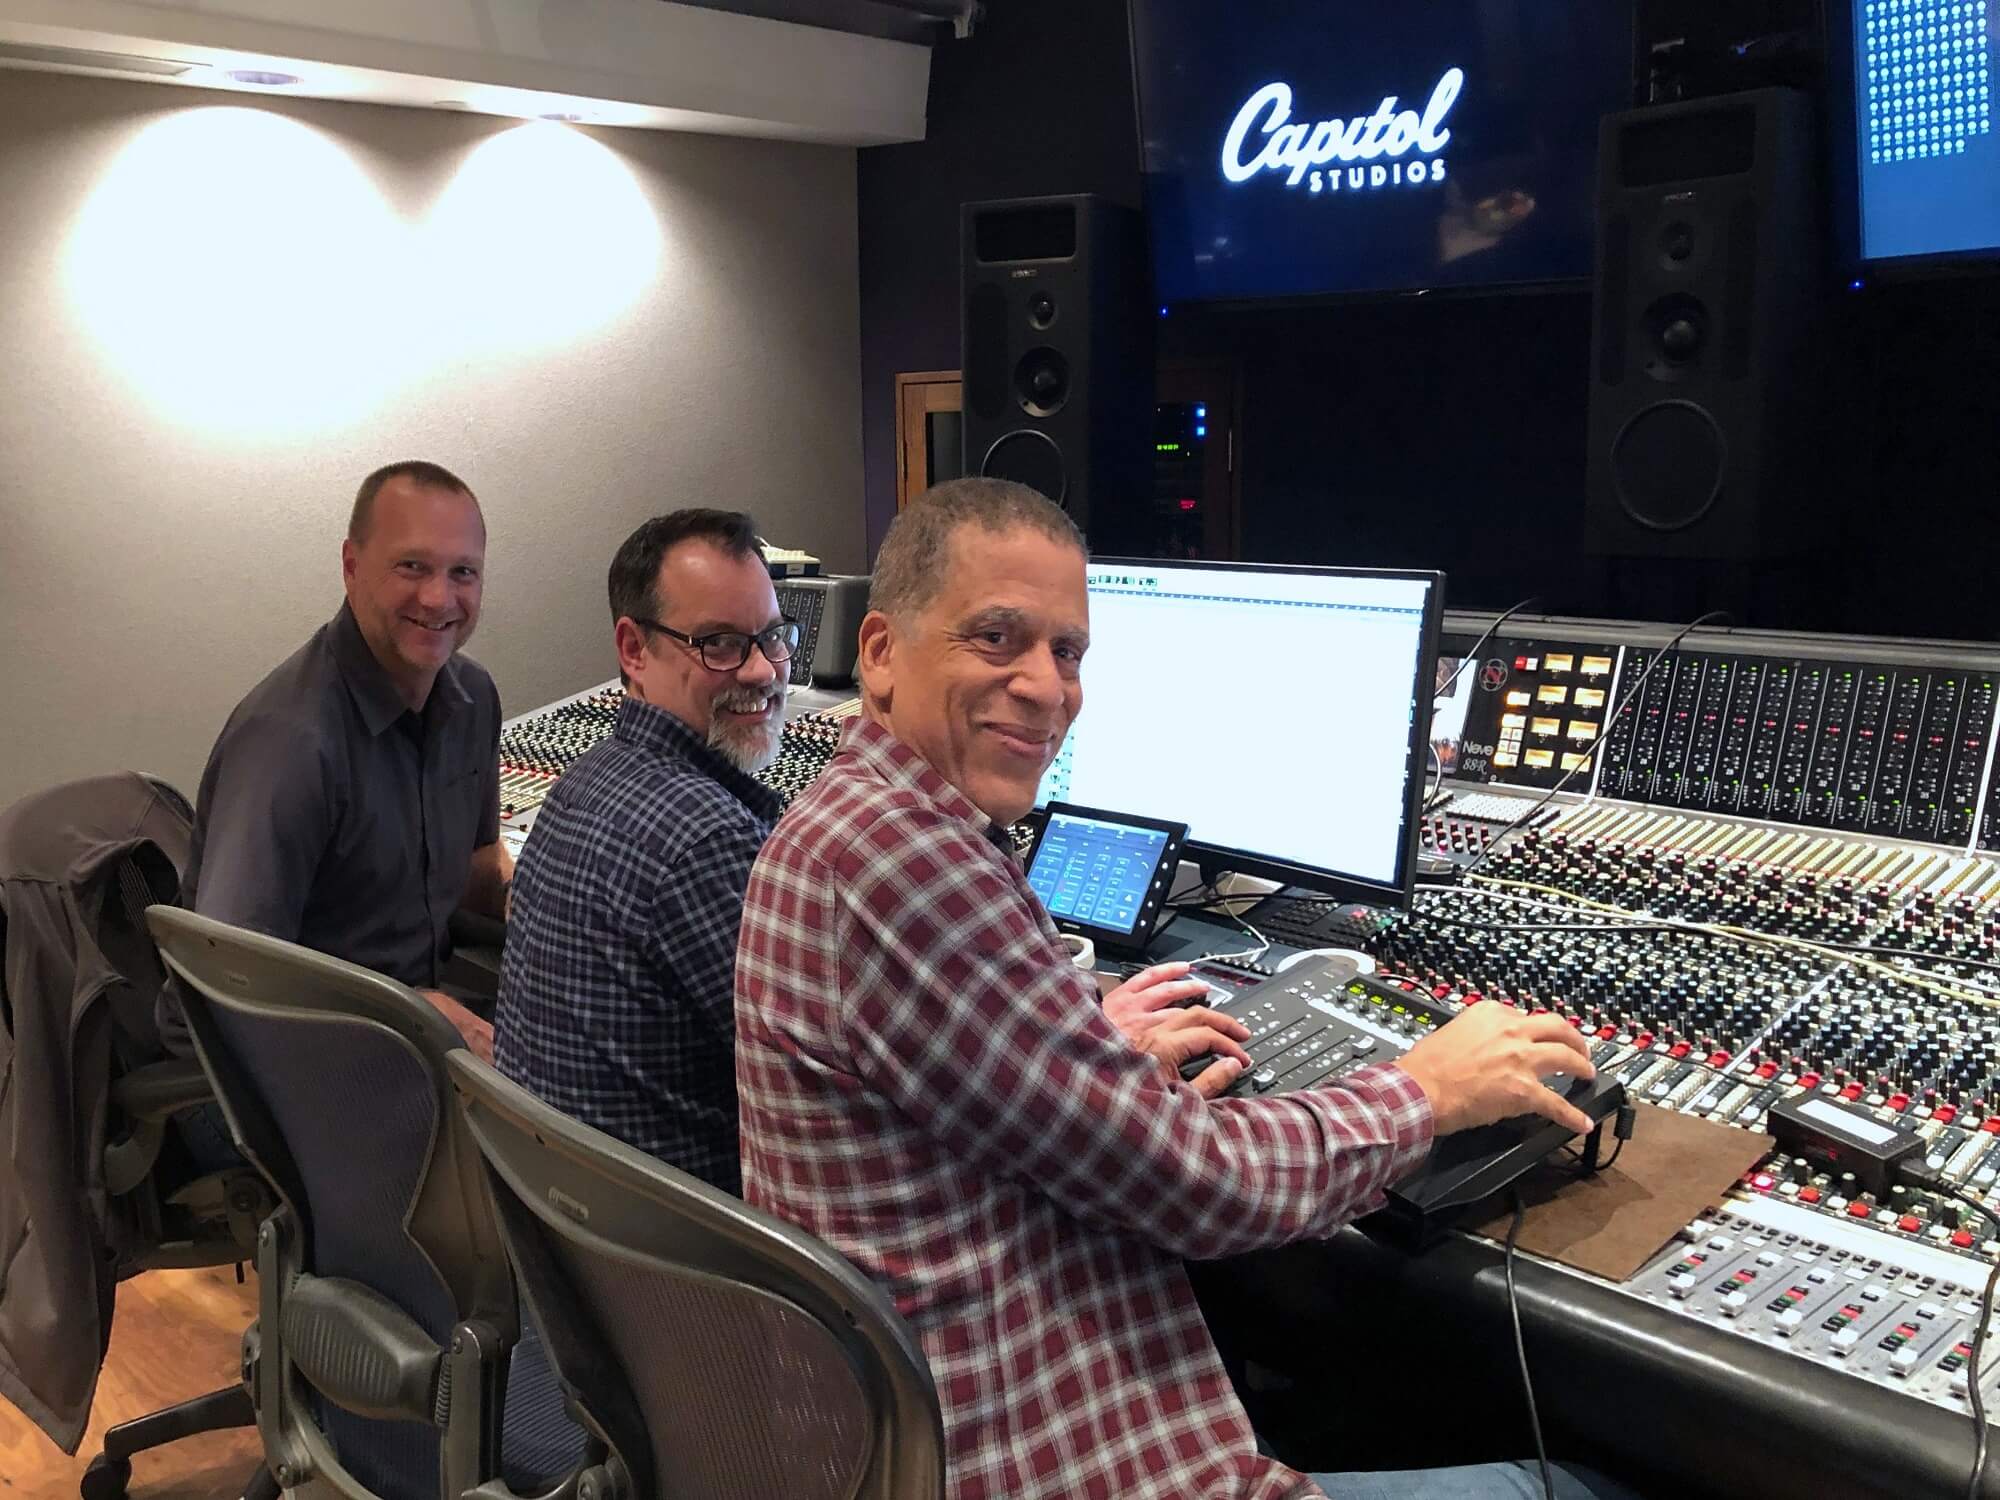 Maurice Patist, Steve Genewick and David Rideau at Capitol Studios